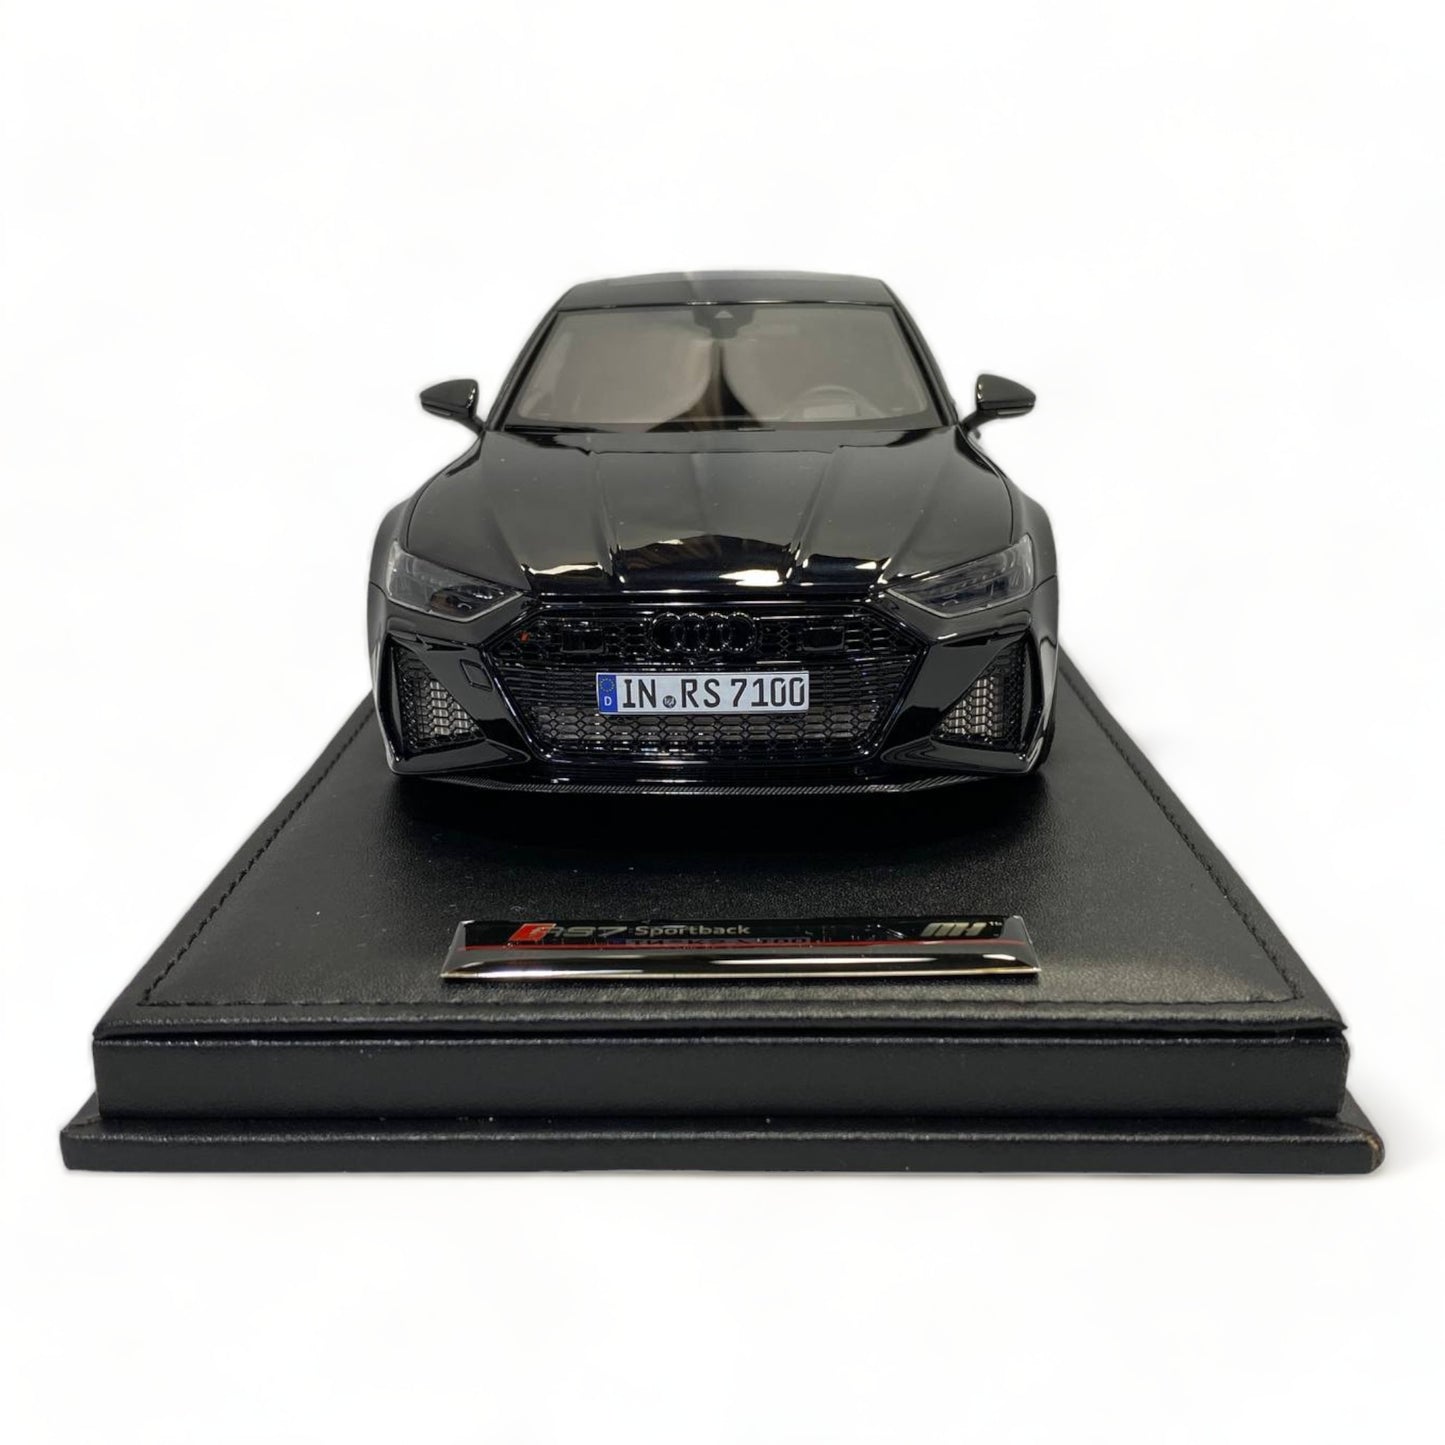 1/18 Diecast Motor Helix Audi RS 7 AVANT BLACK Scale Model Car|Sold in Dturman.com Dubai UAE.